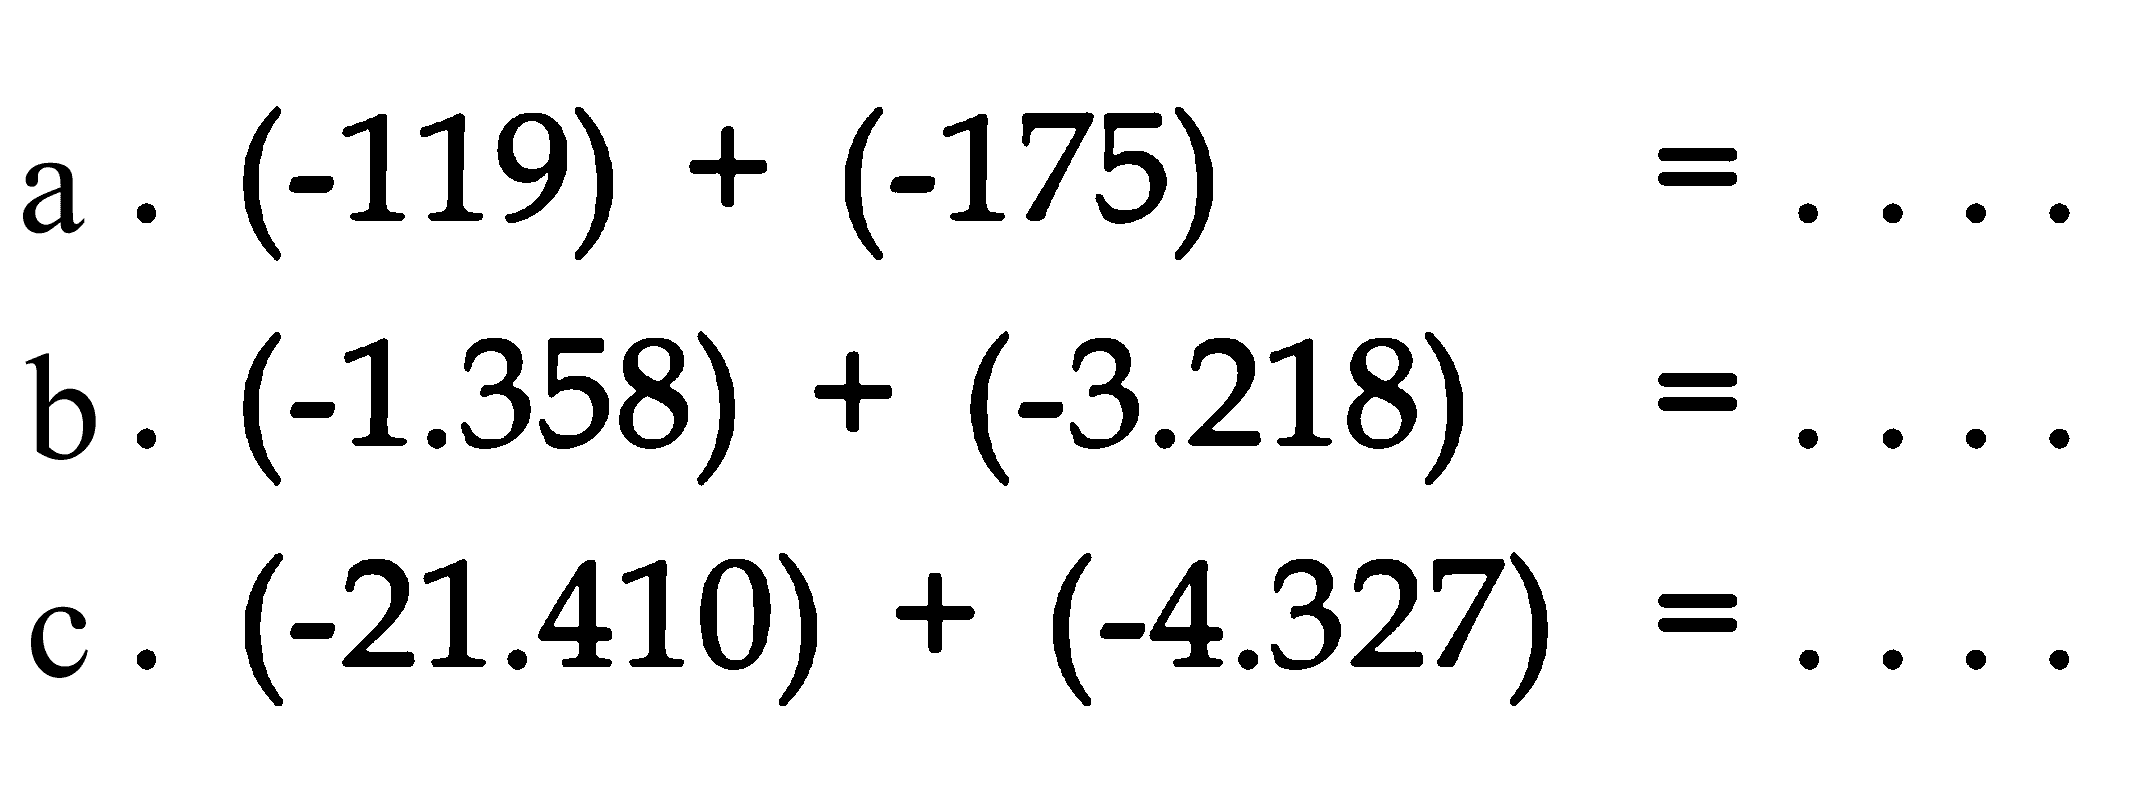 a. (-119) + (-175) = .... b. (-1.358) + (-3.218) = .... c. (-21.410) + (-4.327) = ....